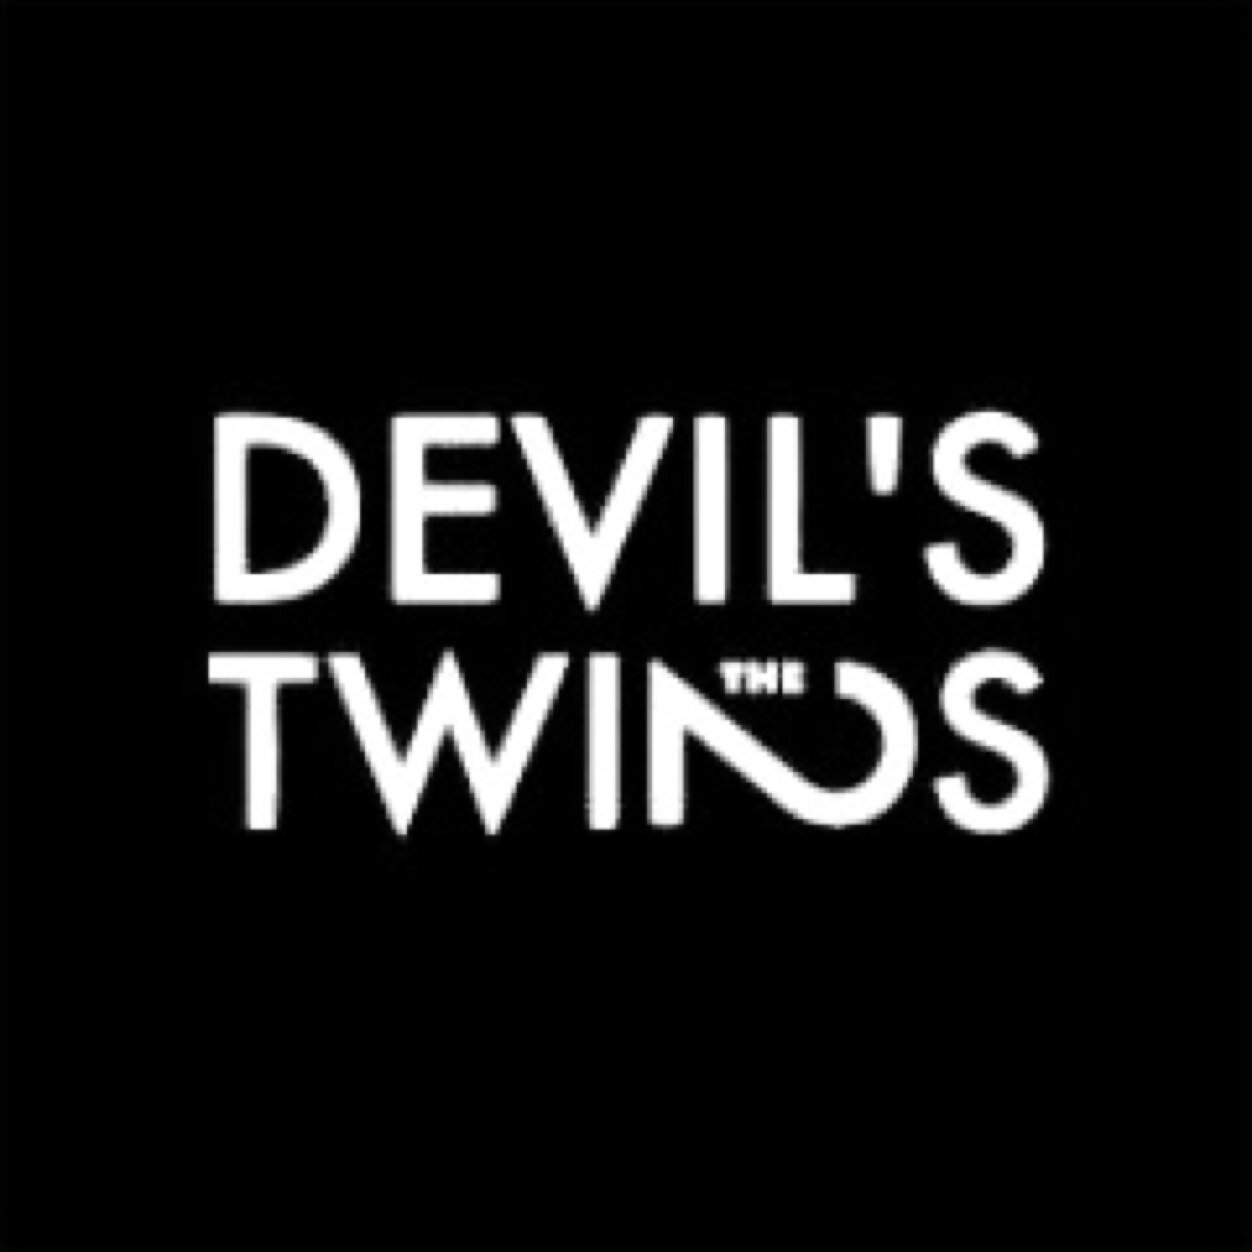 The Devil's Twins